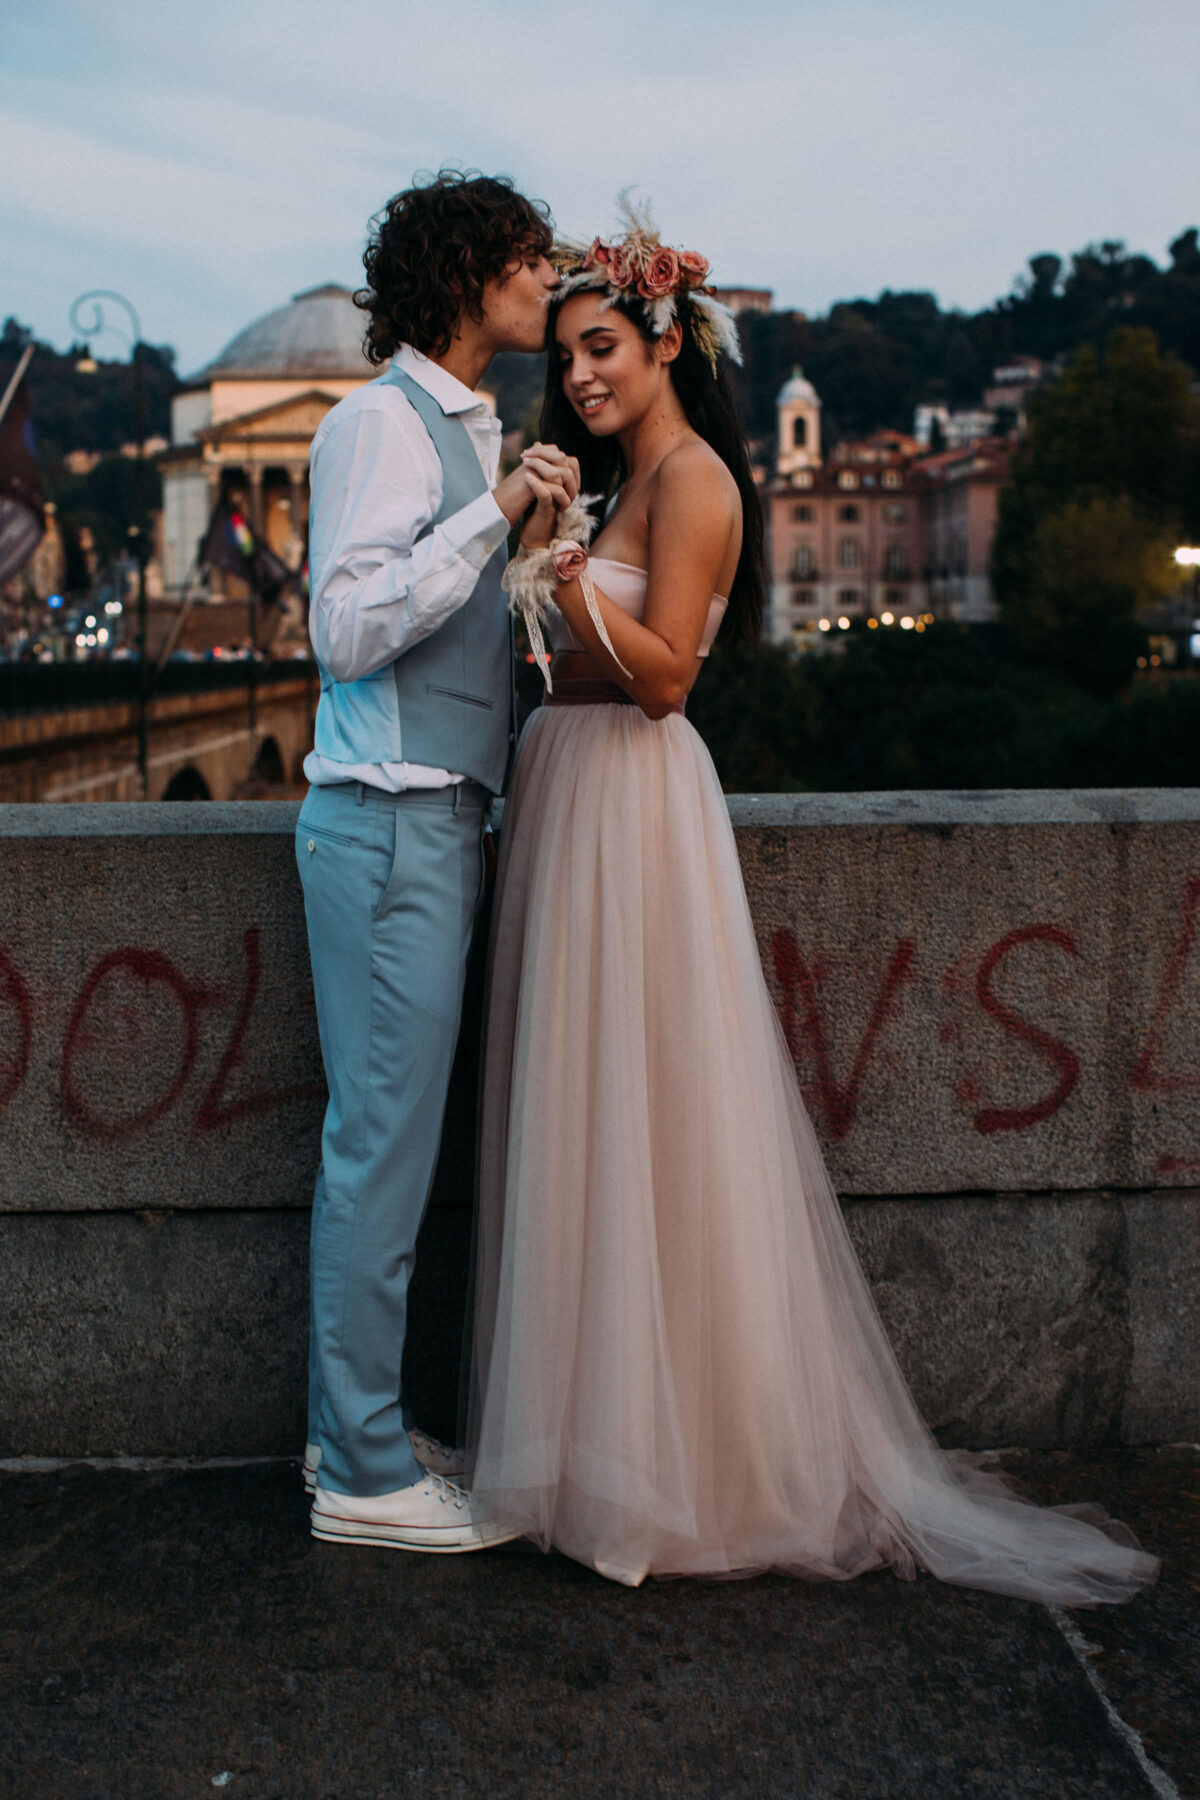 Marriage Proposal Tips - Photo: Giada Joey Cazzola